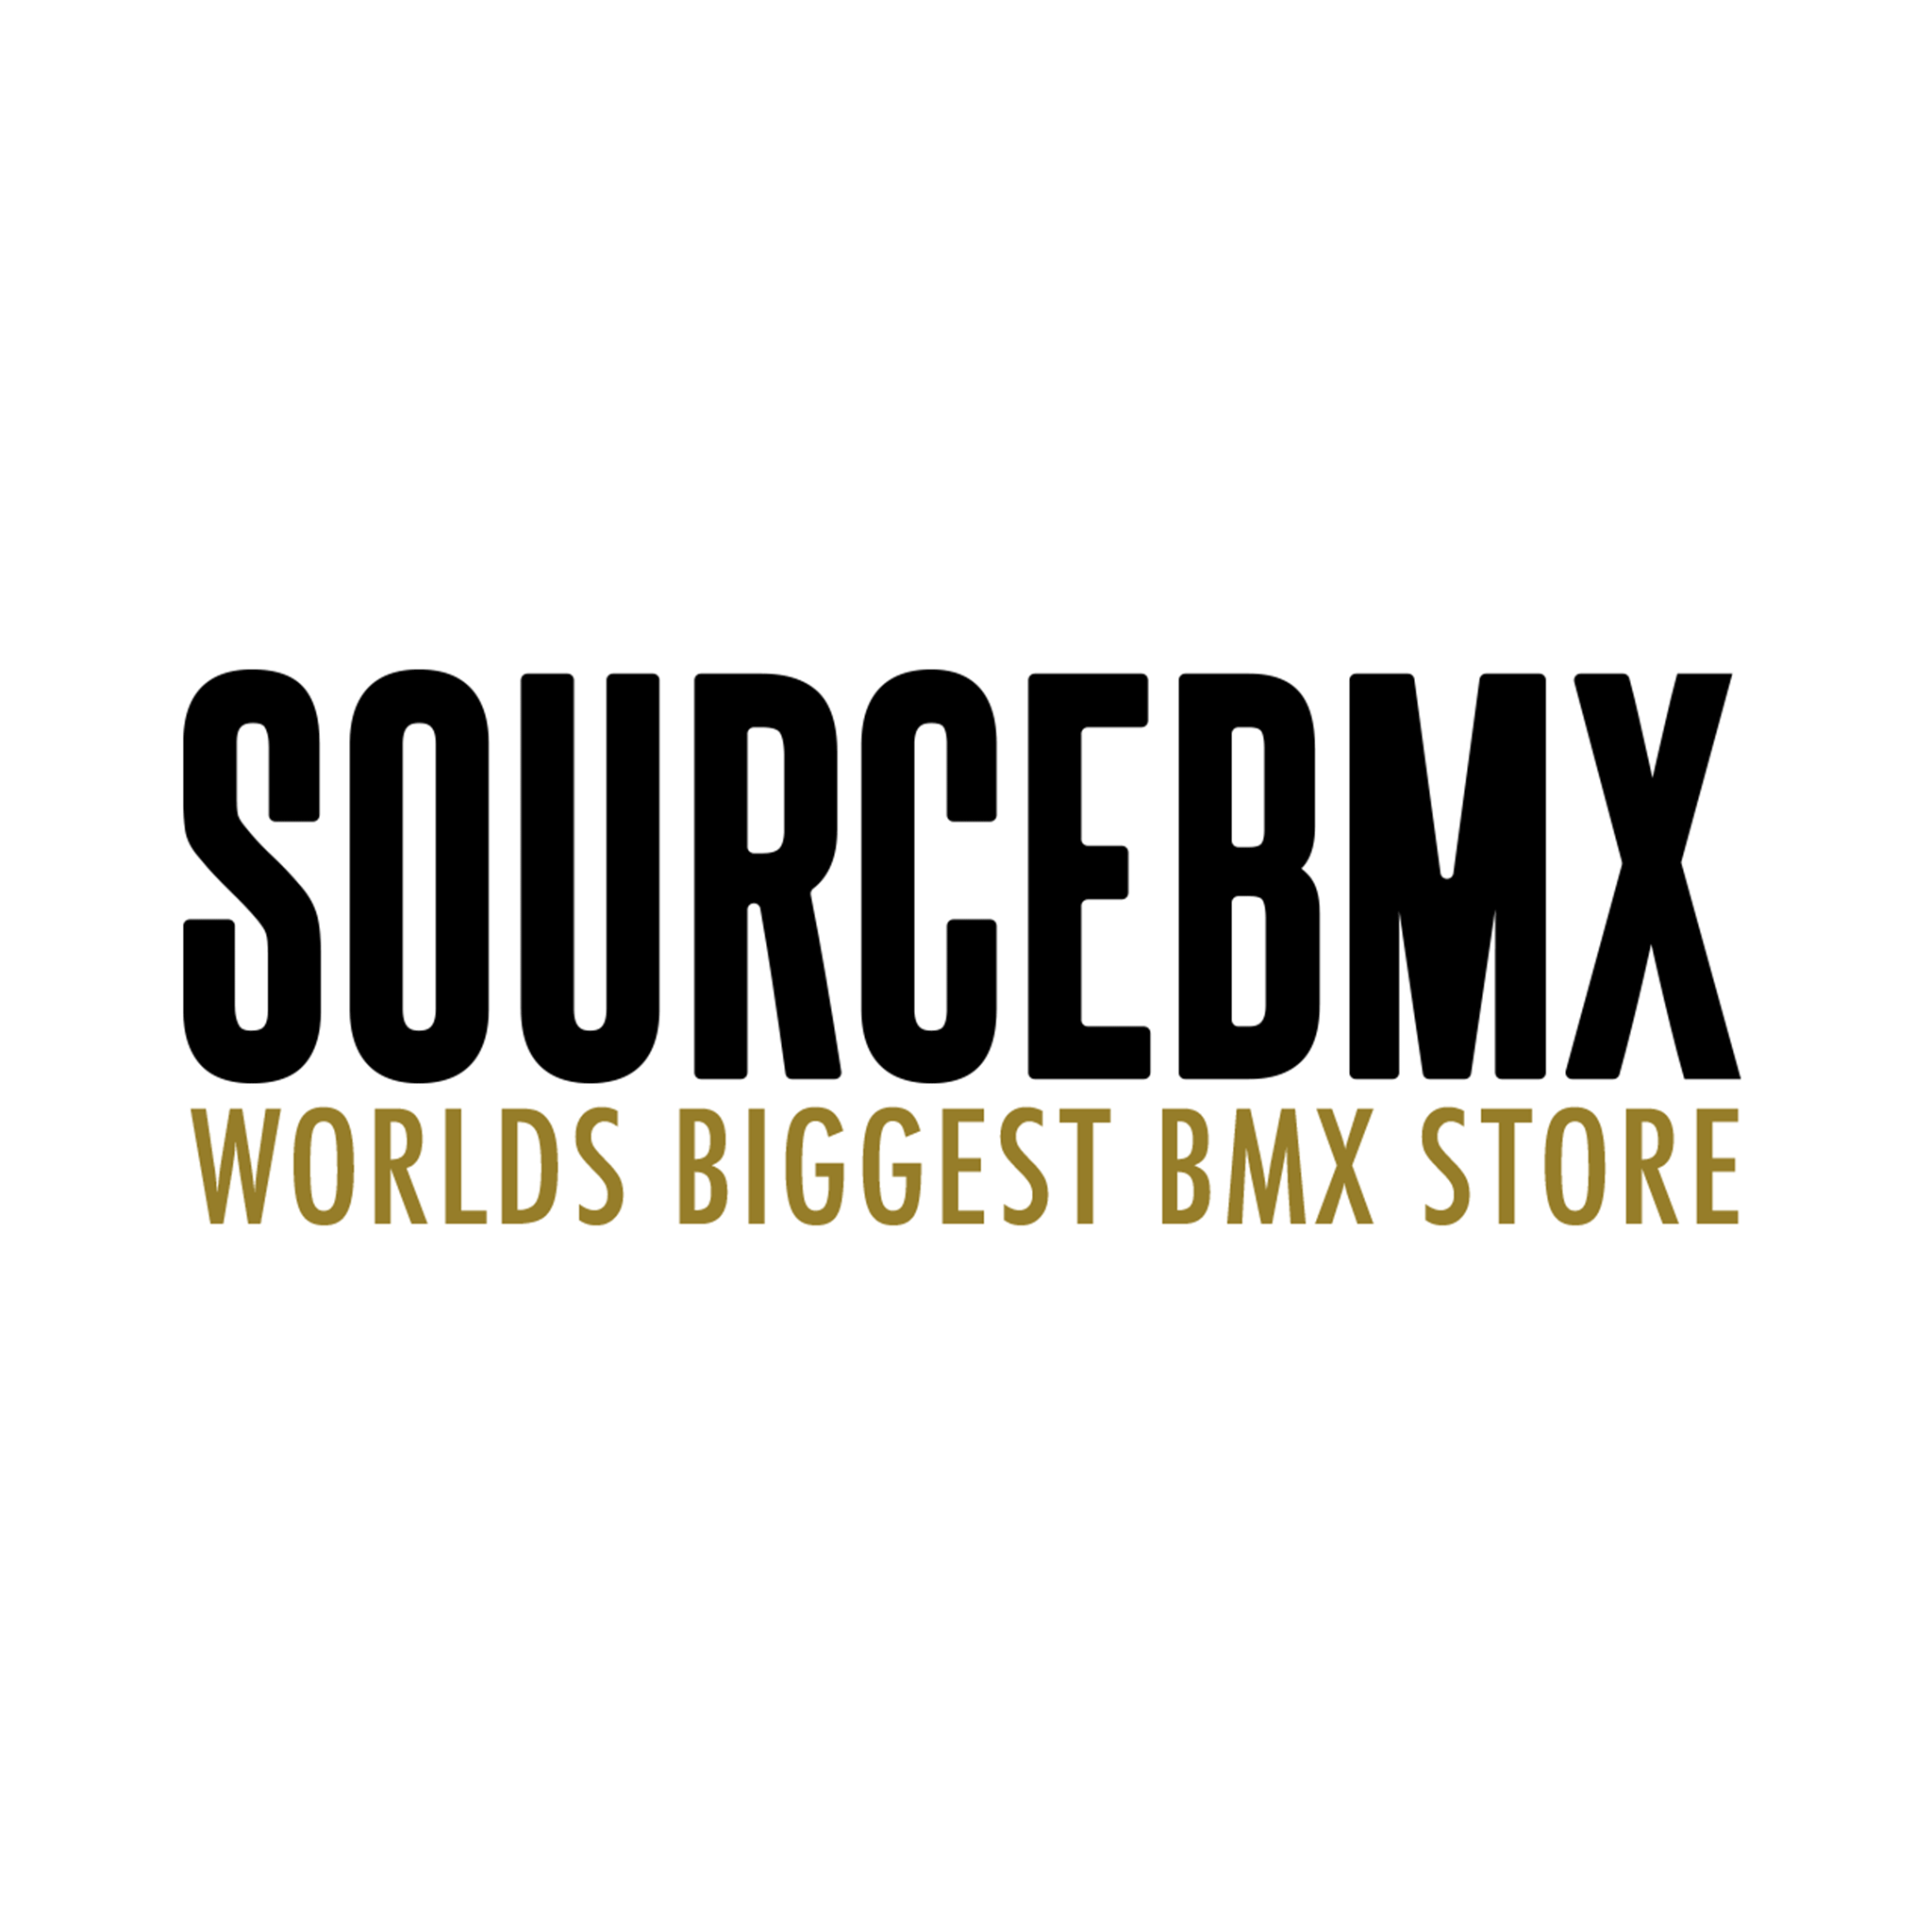 SourceBMX Coupon Codes